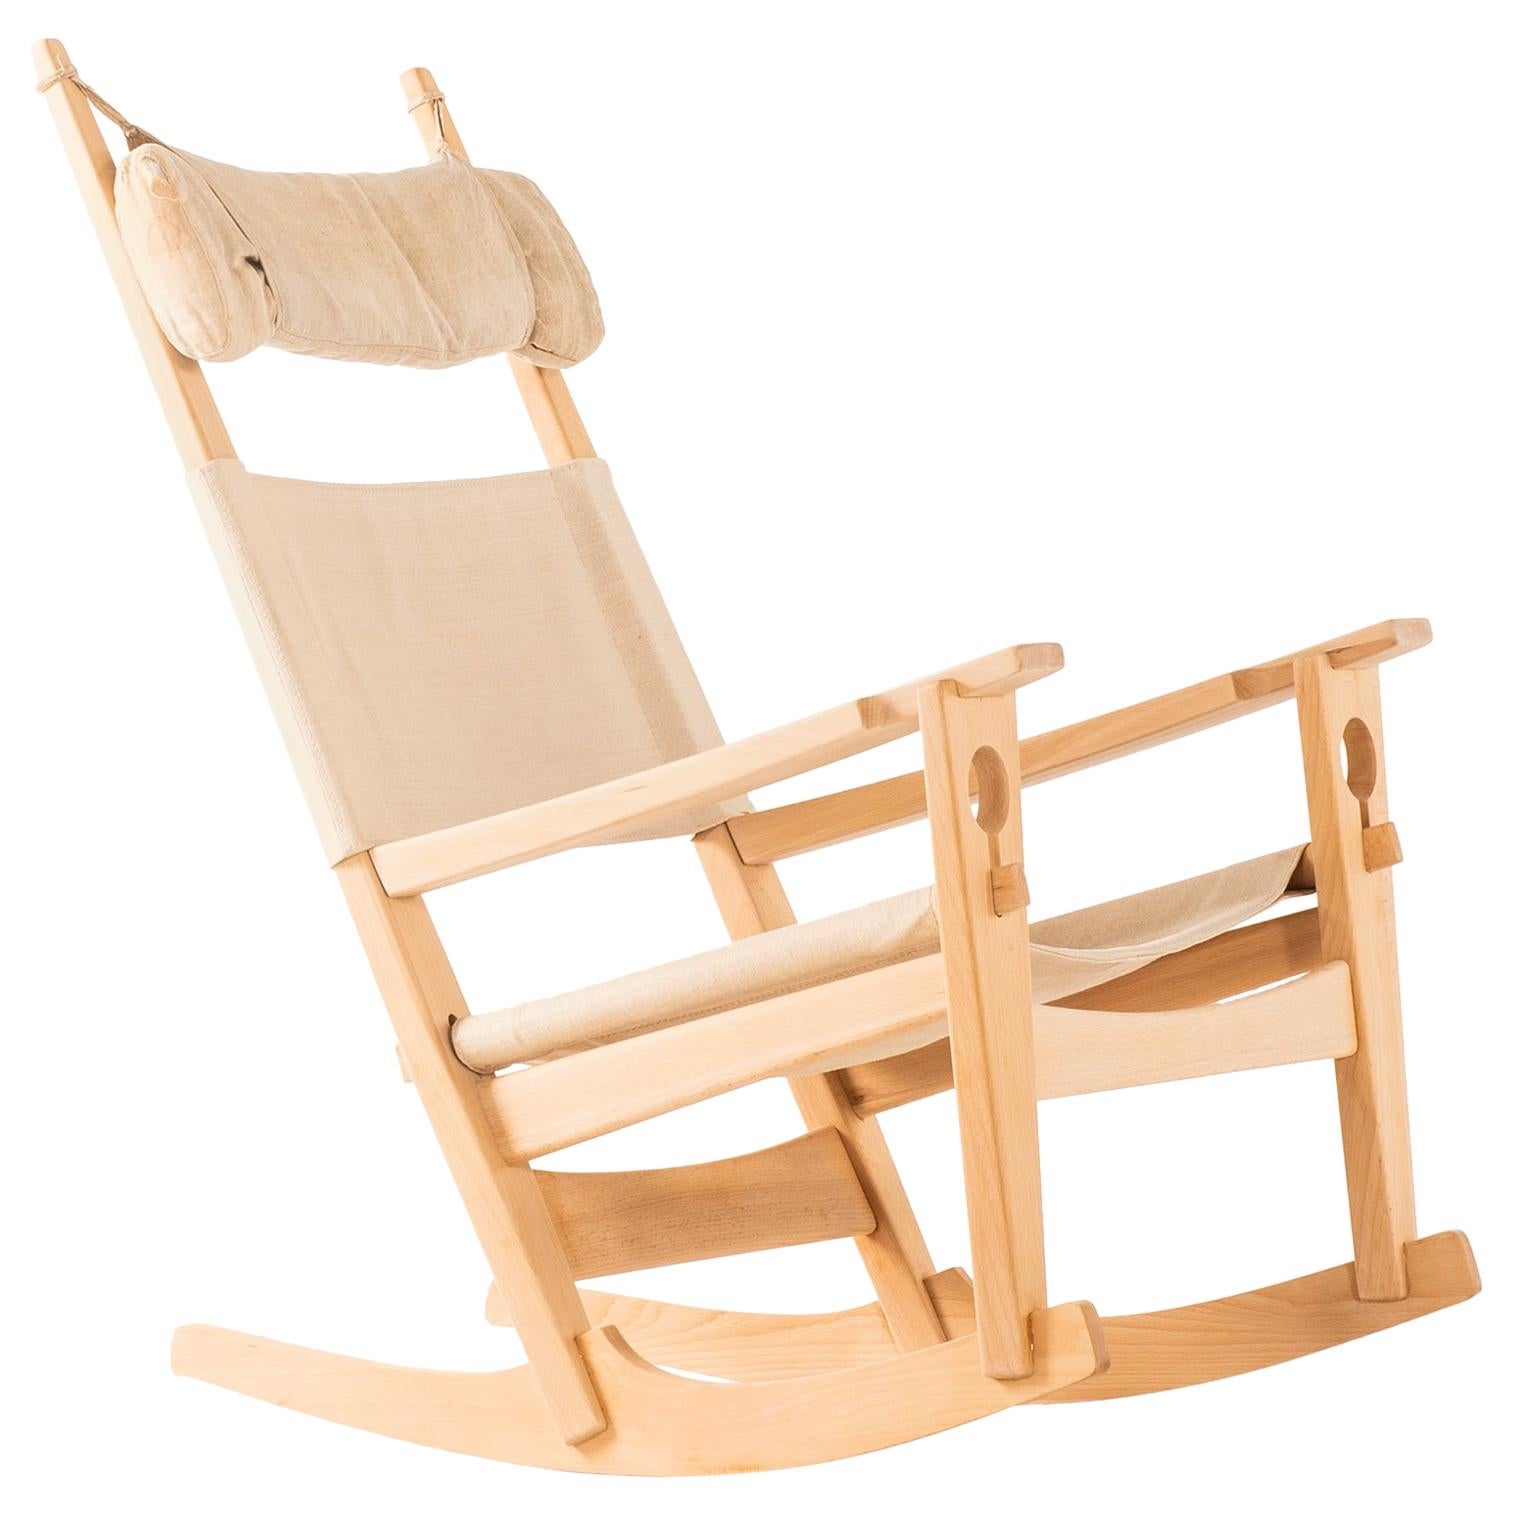 Hans Wegner Rocking Chair Model GE-273 Produced by GETAMA in Denmark